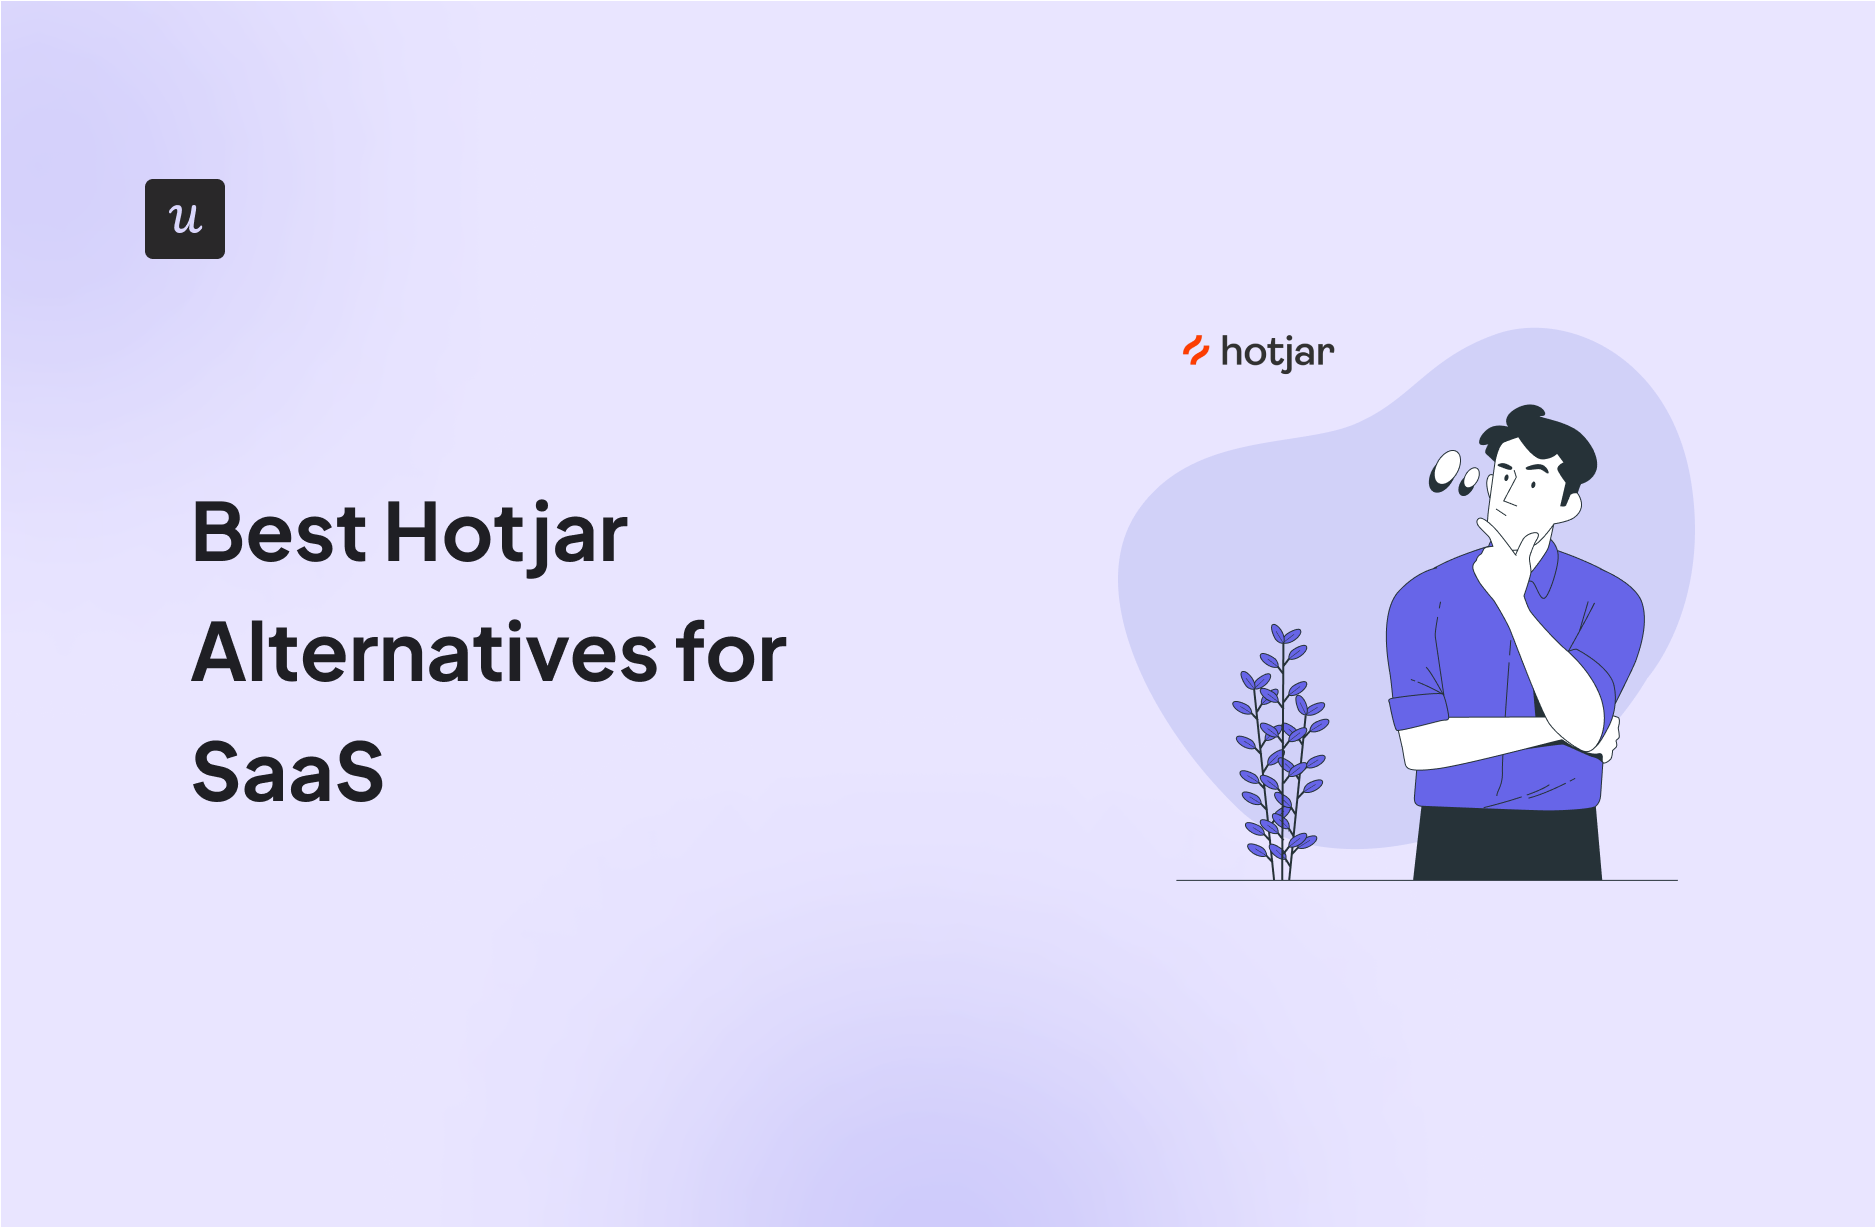 Best Hotjar Alternatives for SaaS